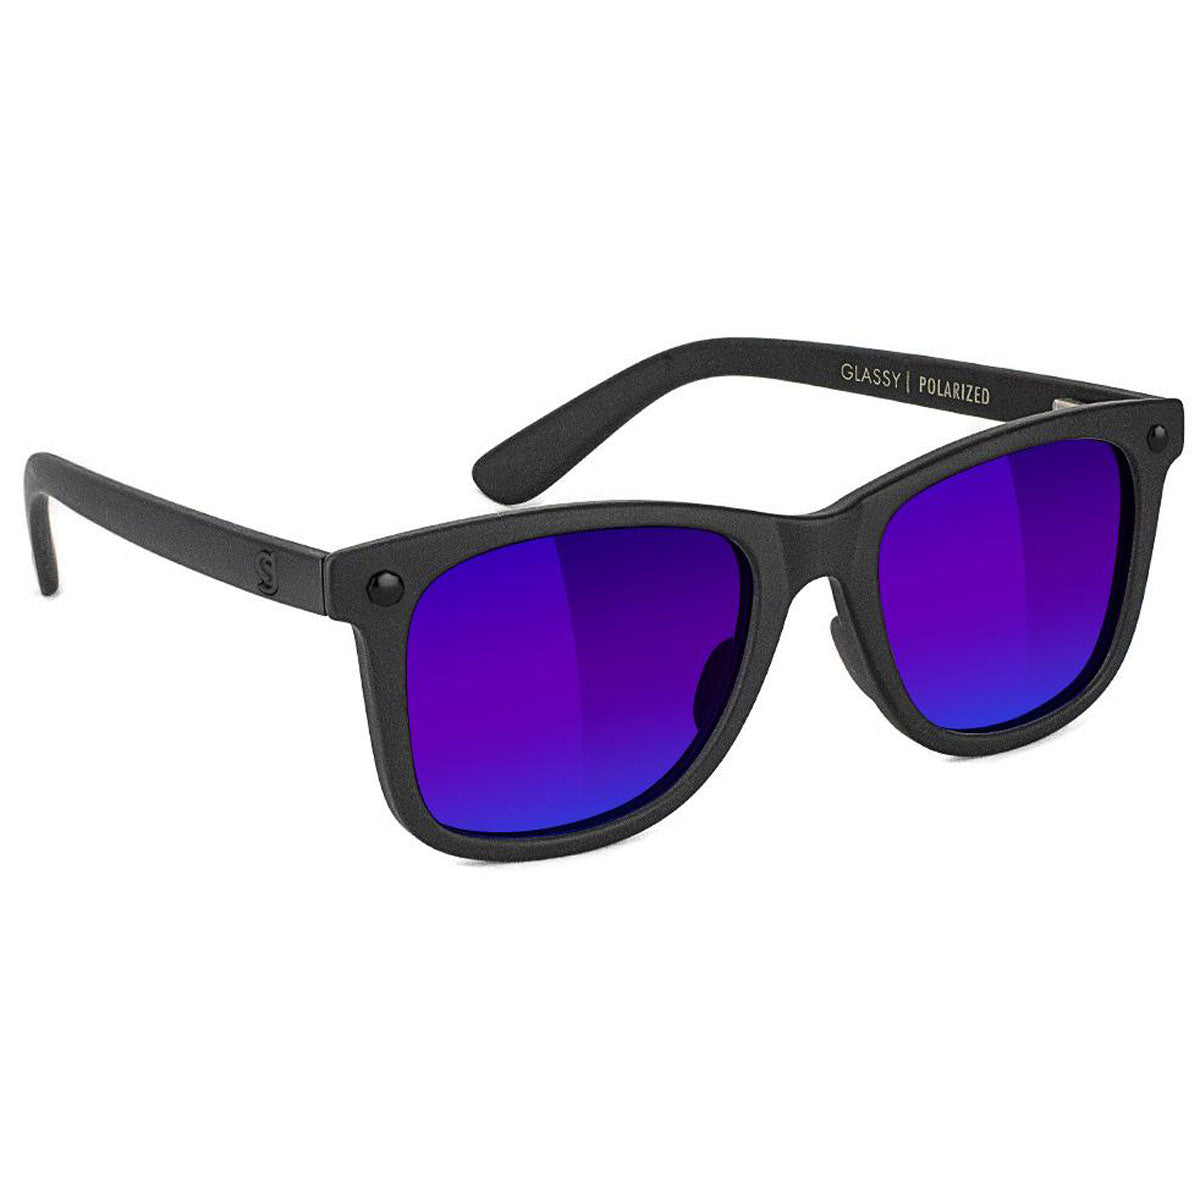 Glassy Mikemo Premium Polarized Sunglasses - Black Out/Blue Mirror image 1